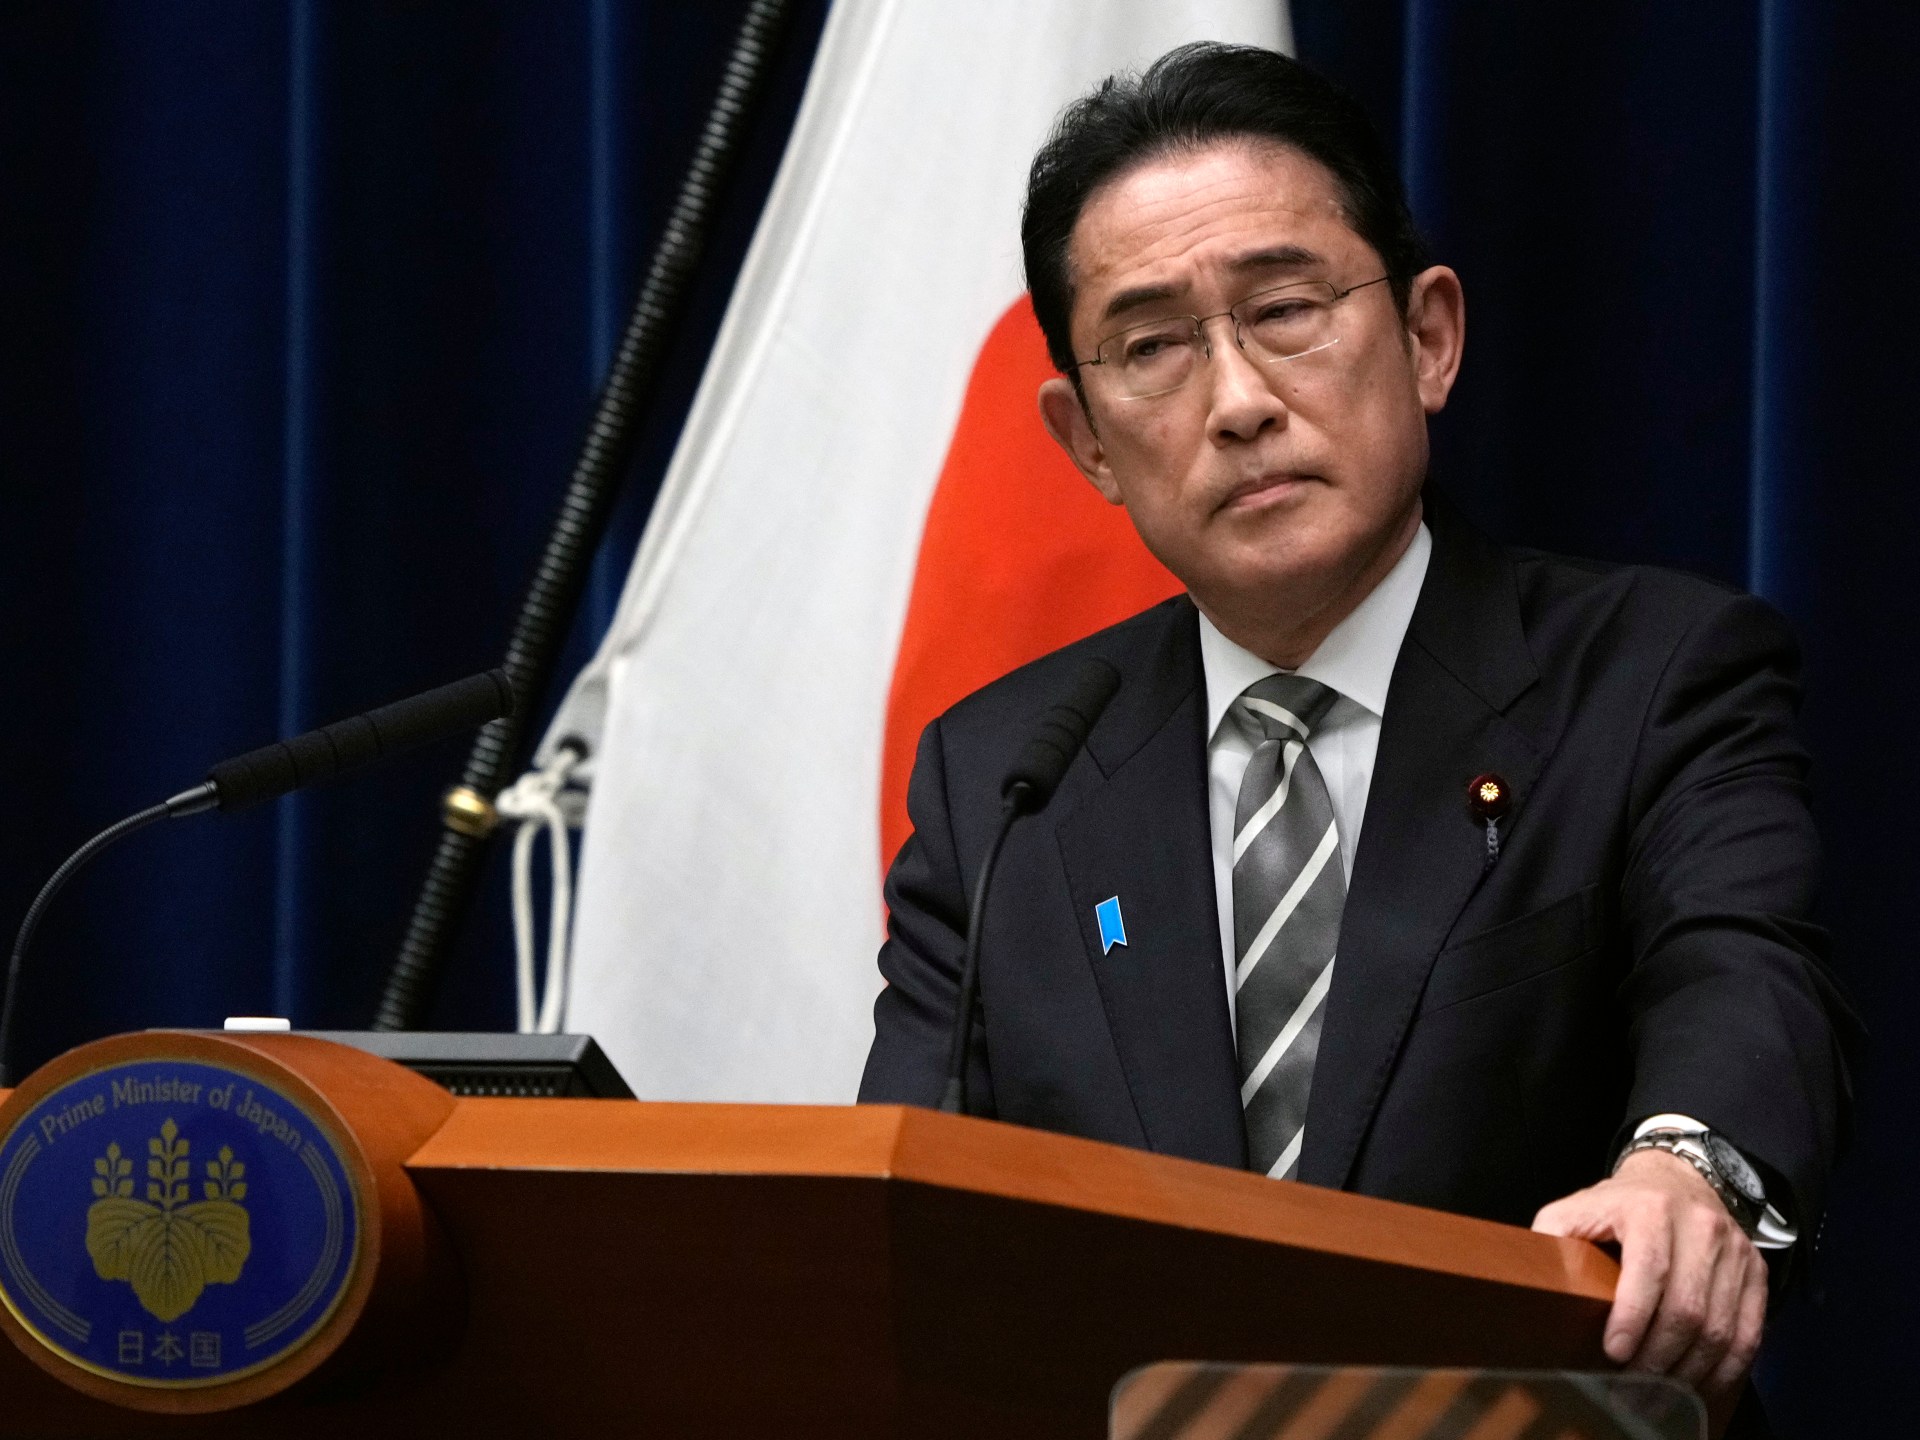 Ministers quit as Japan’s PM Kishida battles for trust amid fraud scandal | Politics News